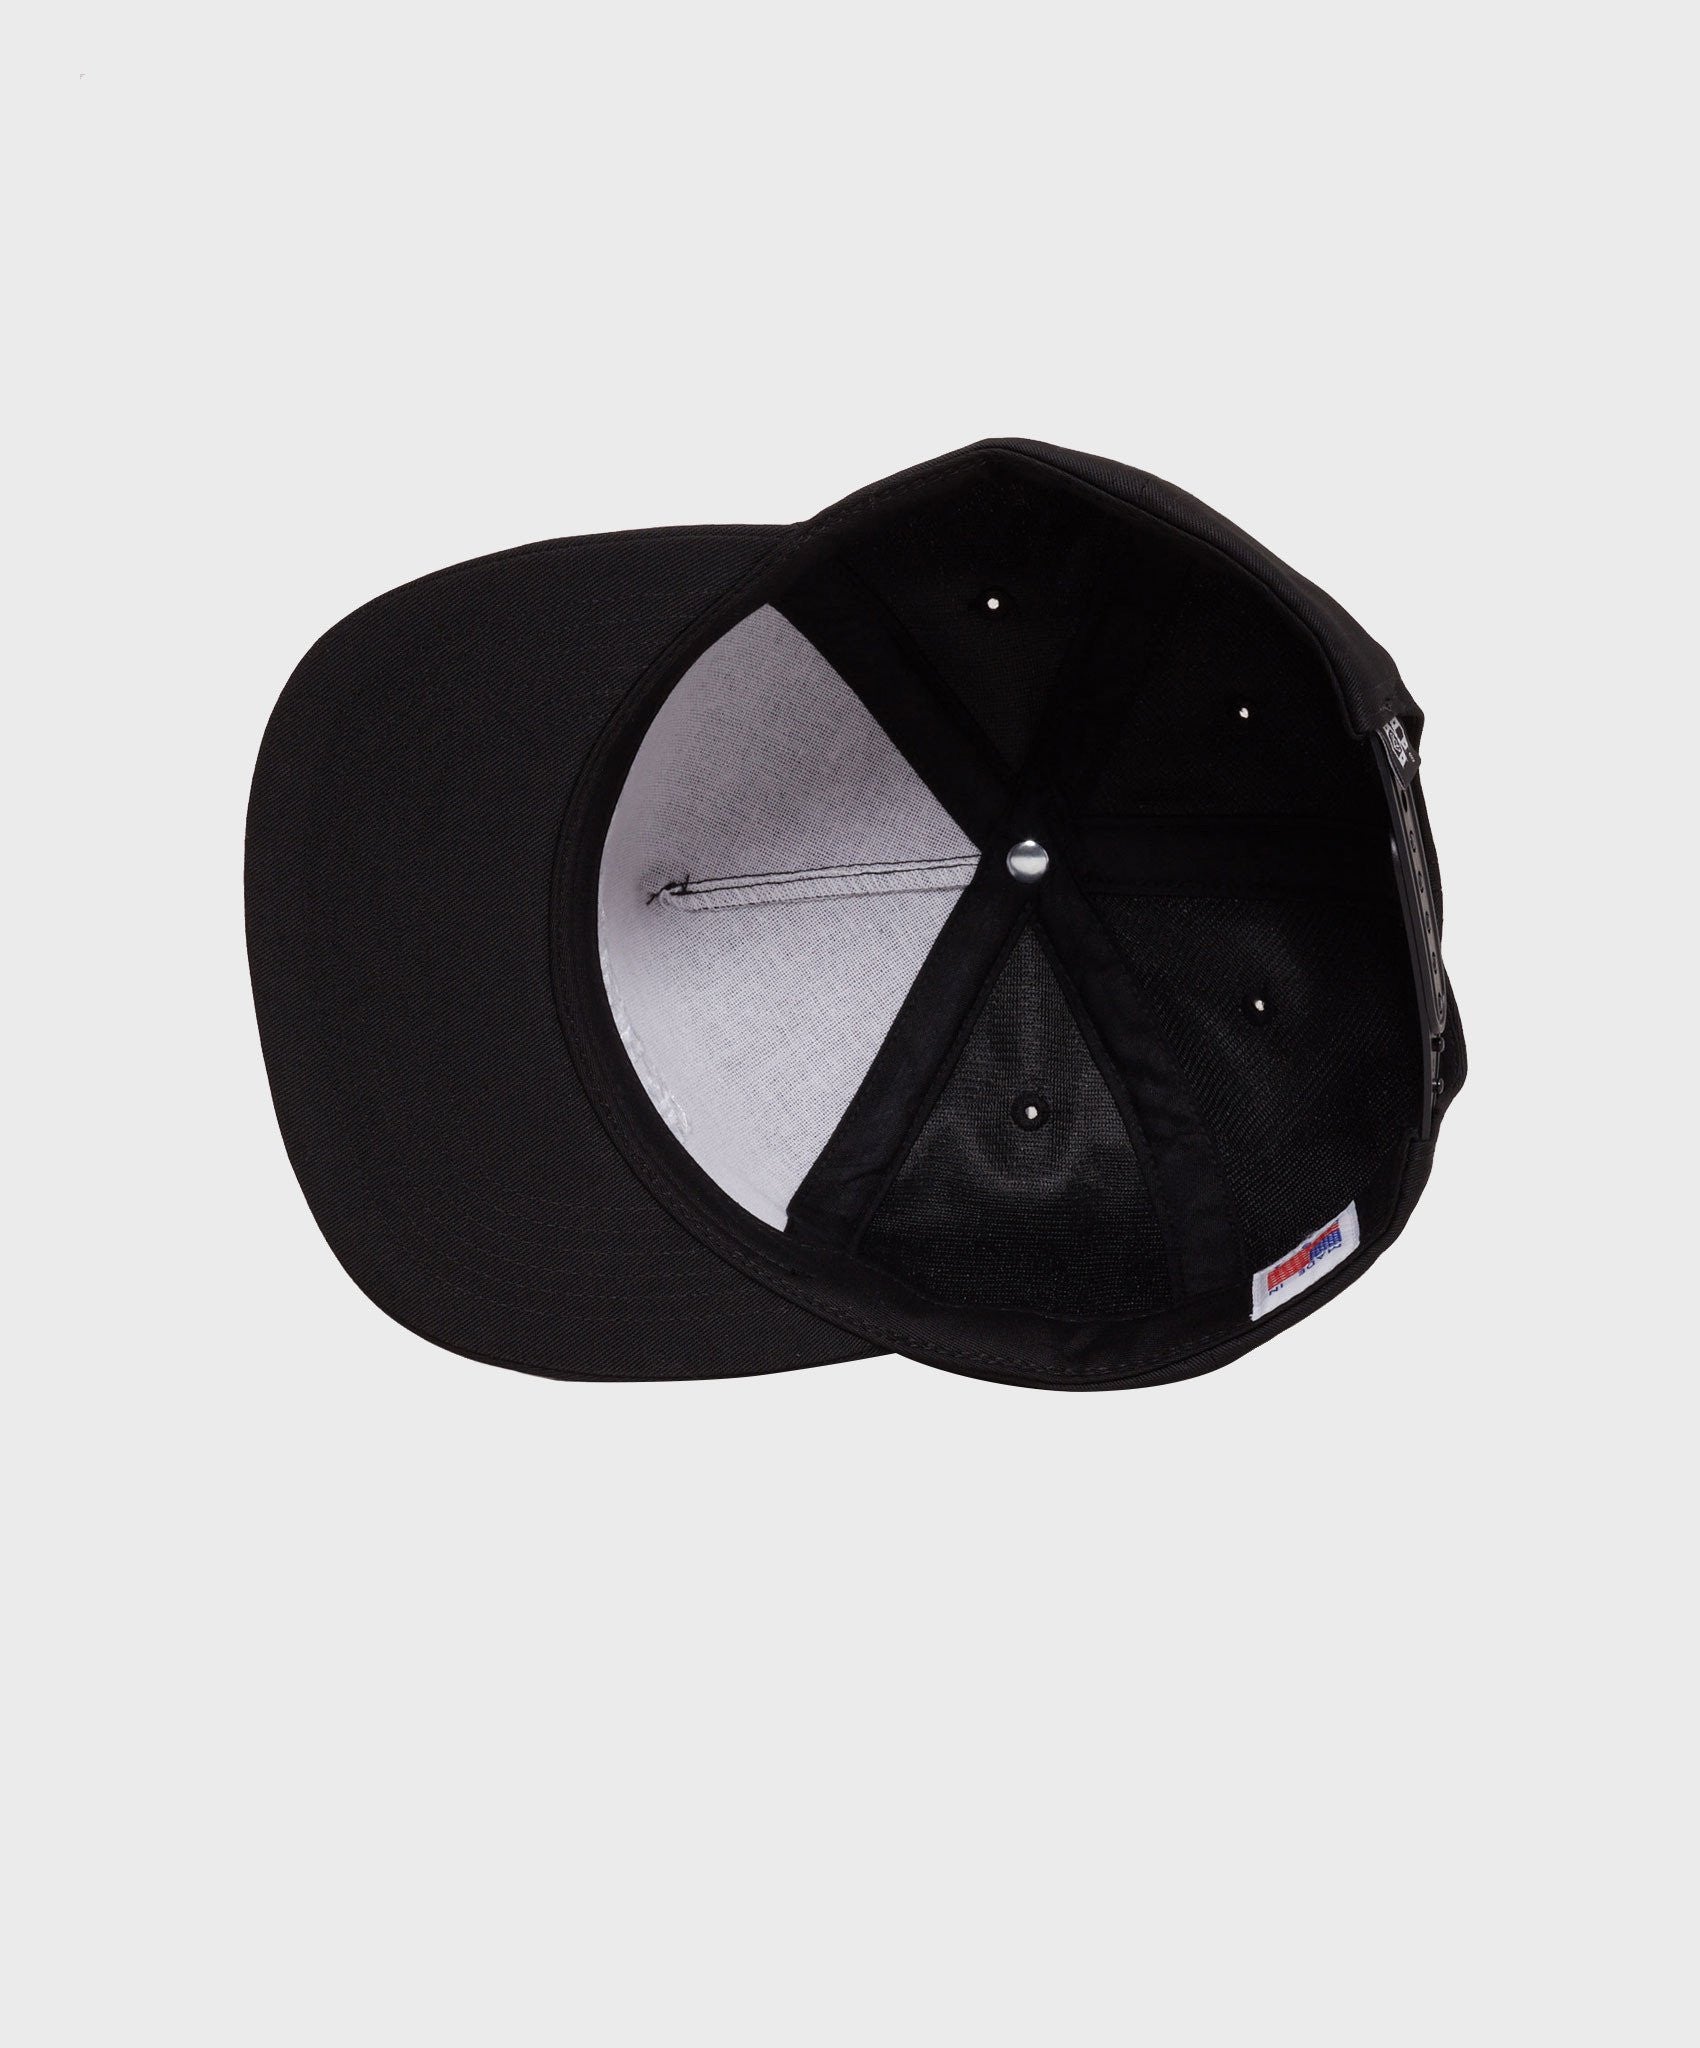 REBEL8 x Killer Mike - Dusty Snapback Hat, Black - The Giant Peach